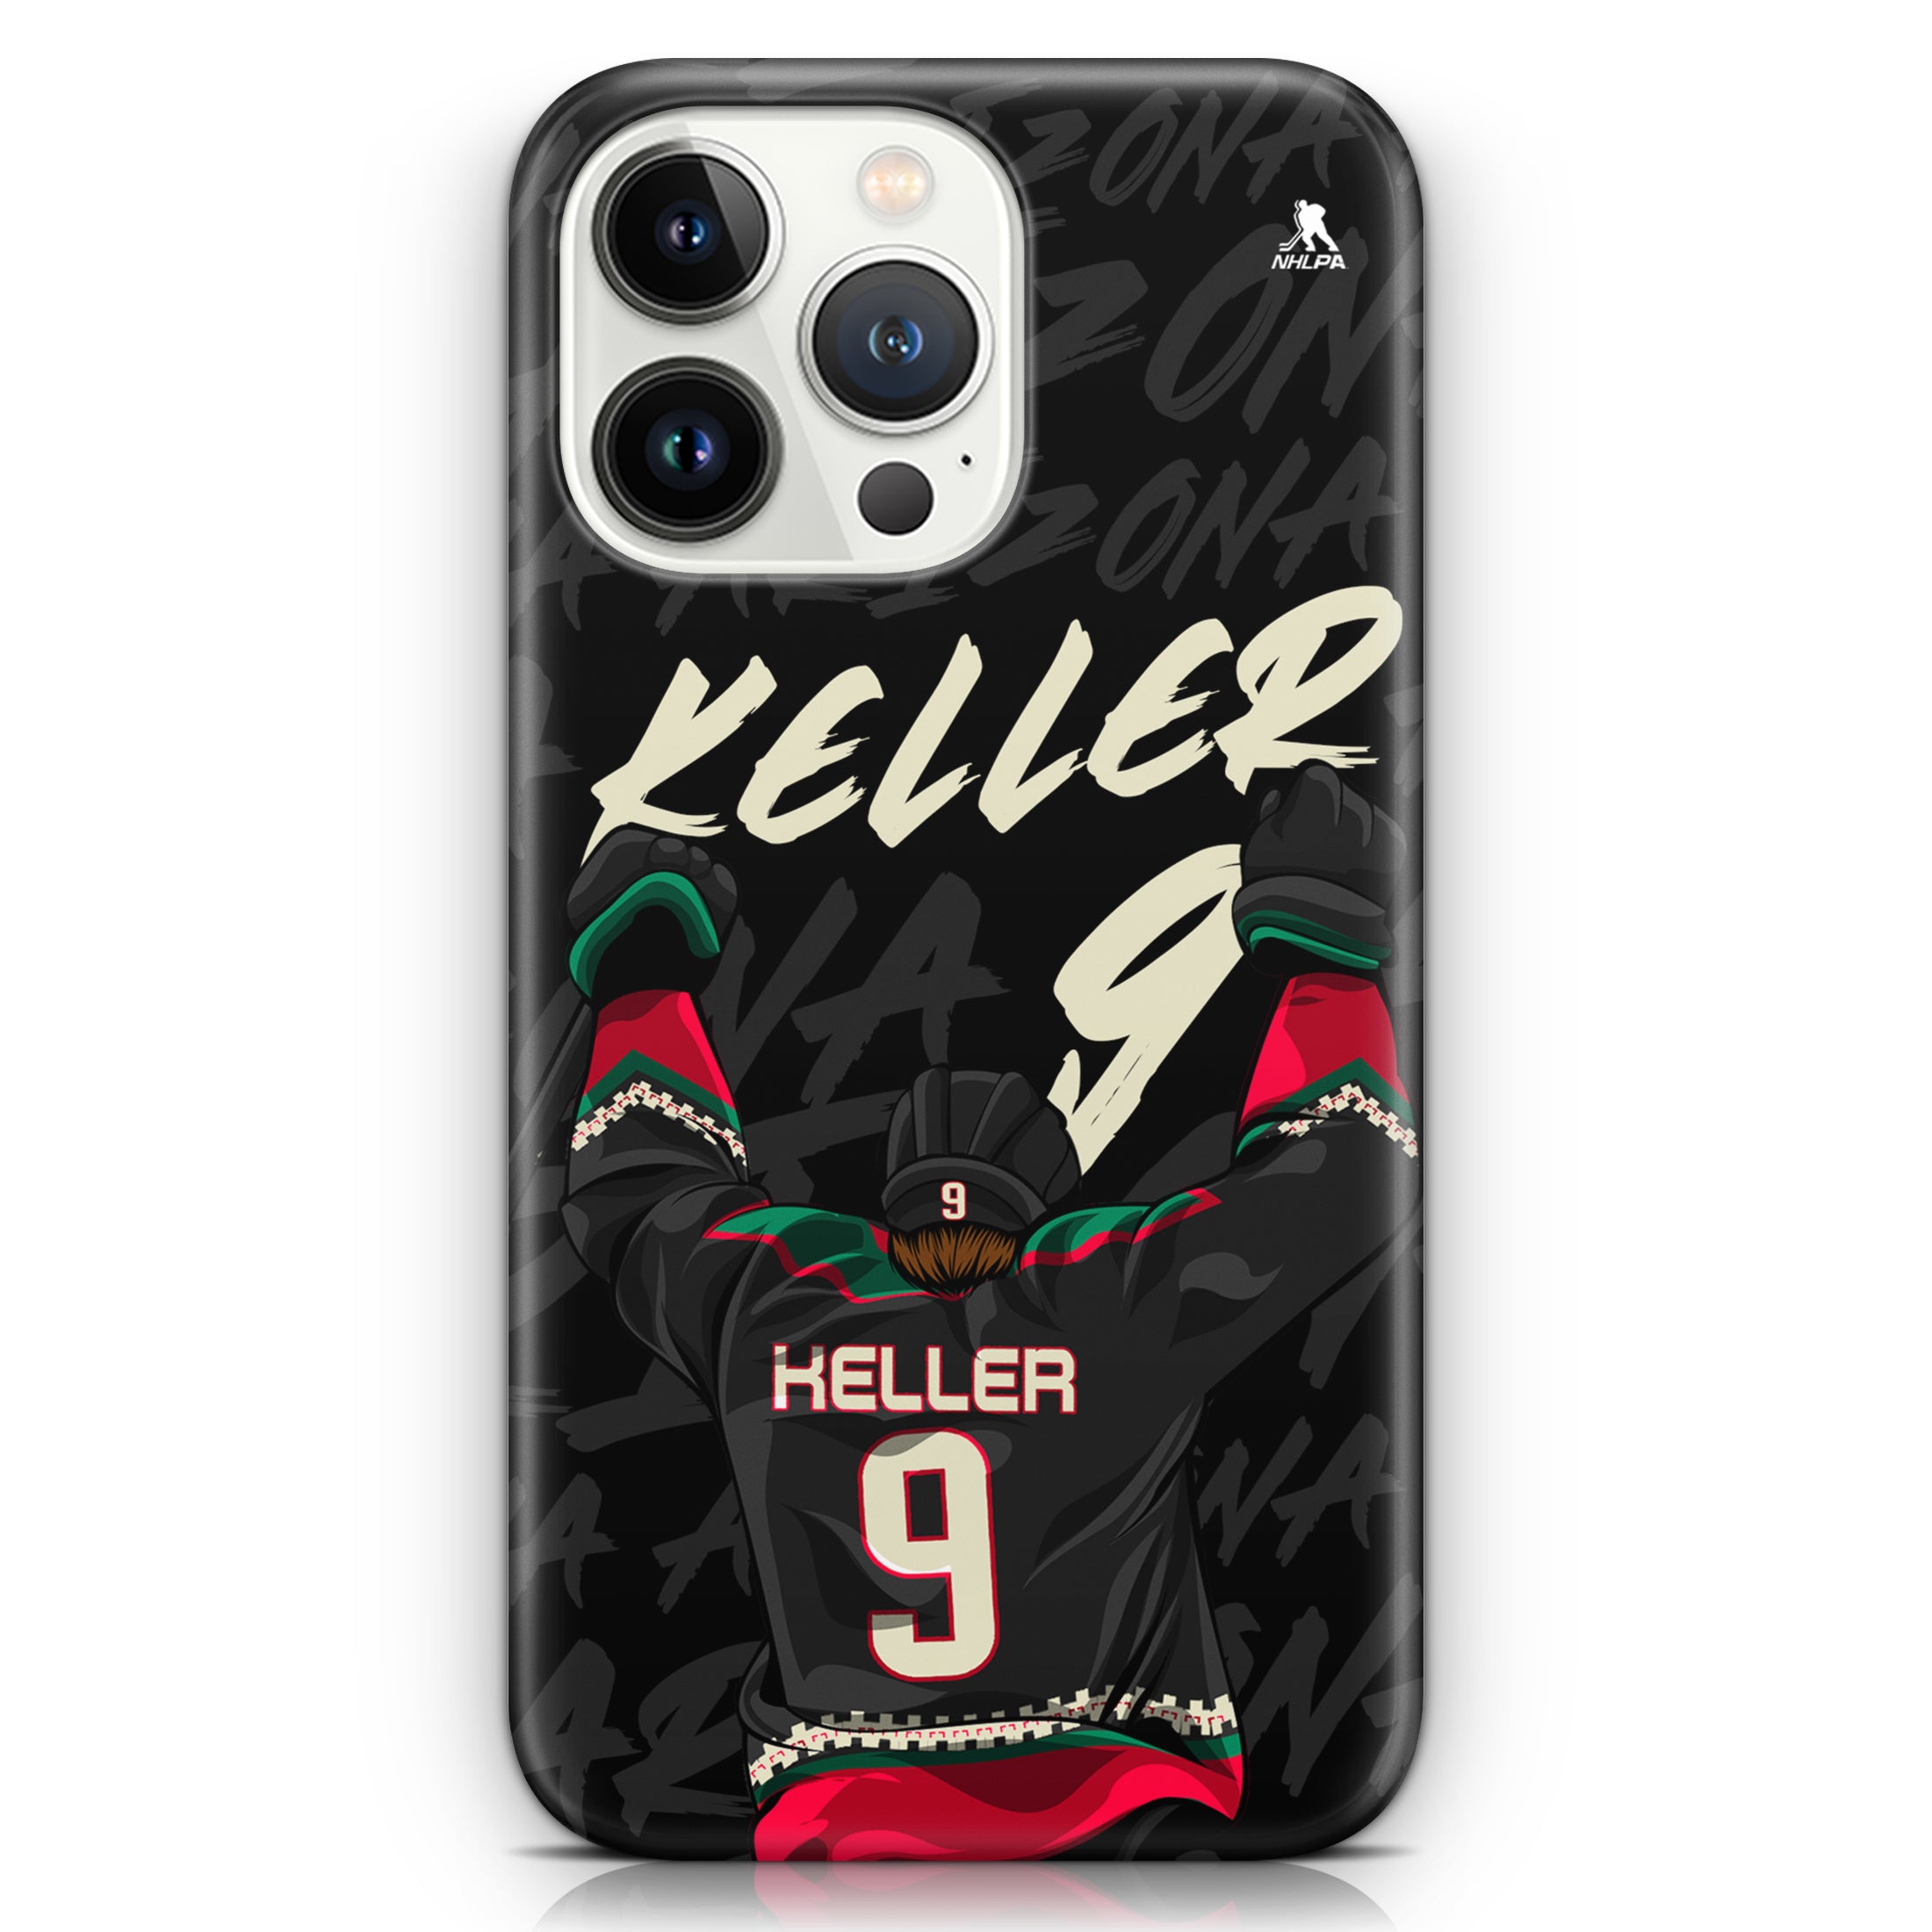 Keller Star Series 2.0 Case